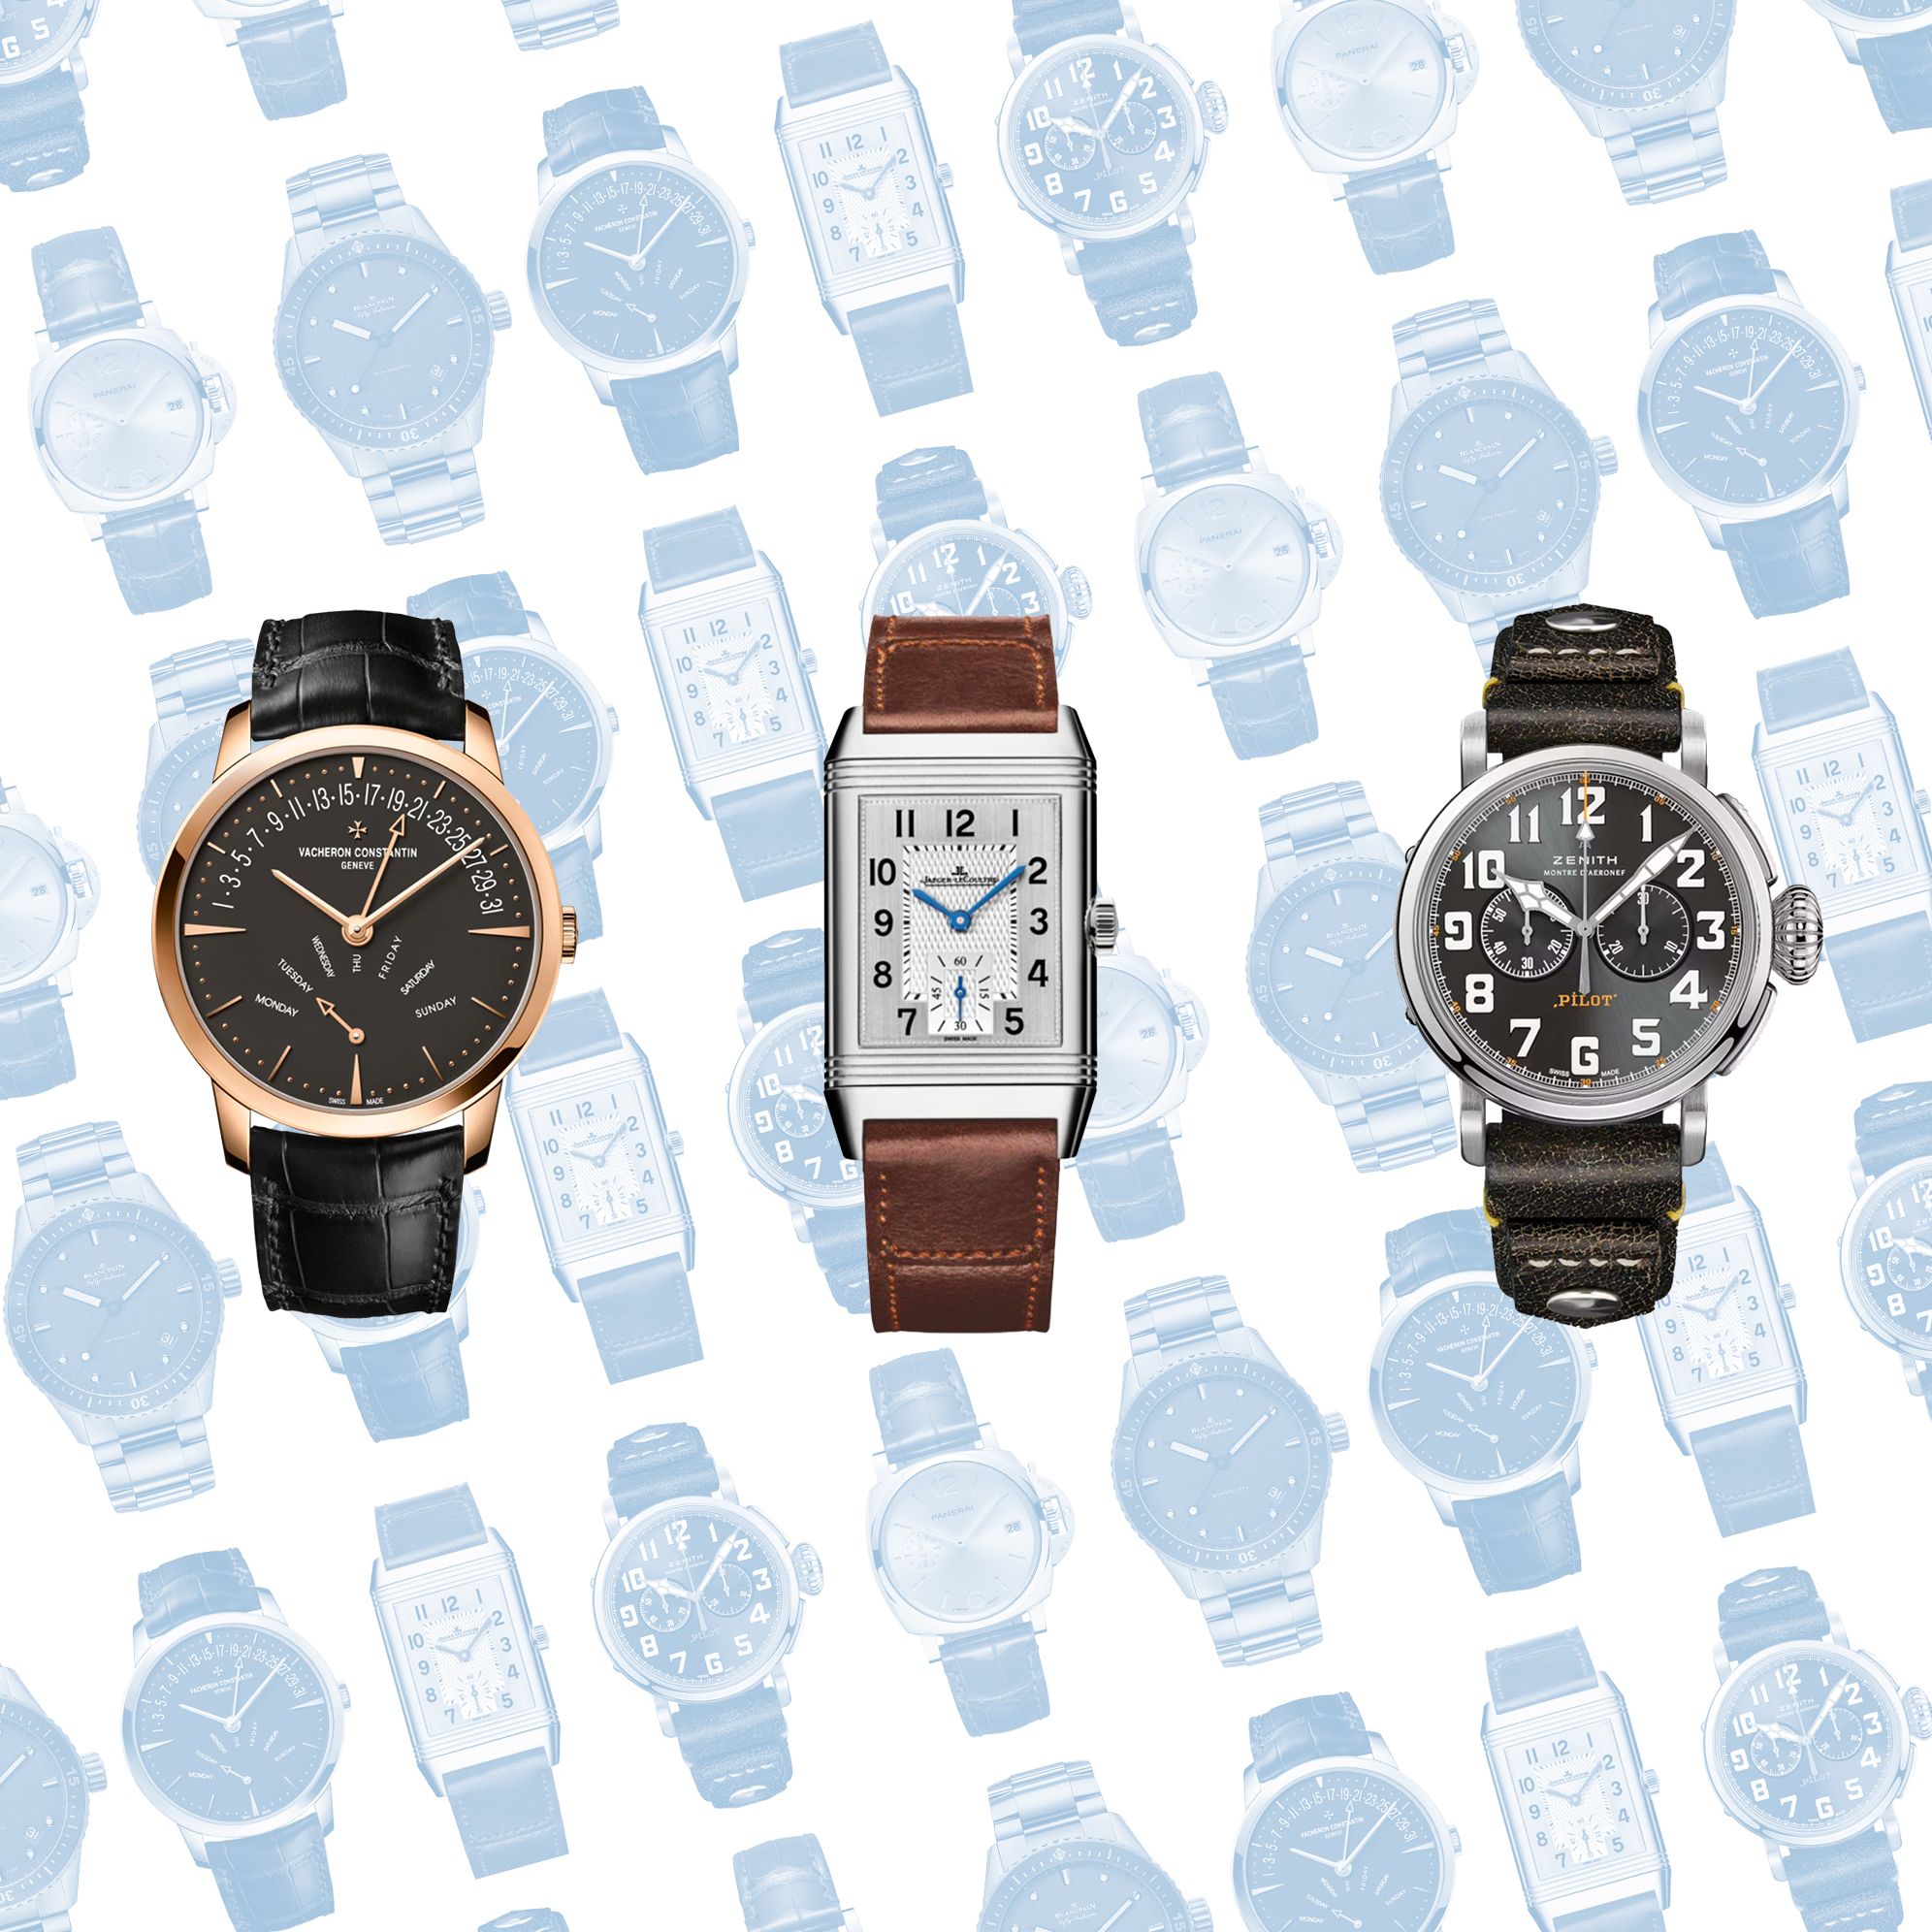 tetraëder Cataract Incarijk 20+ Best Watch Brands for 2023 - Top Luxury Watch Brands to Know